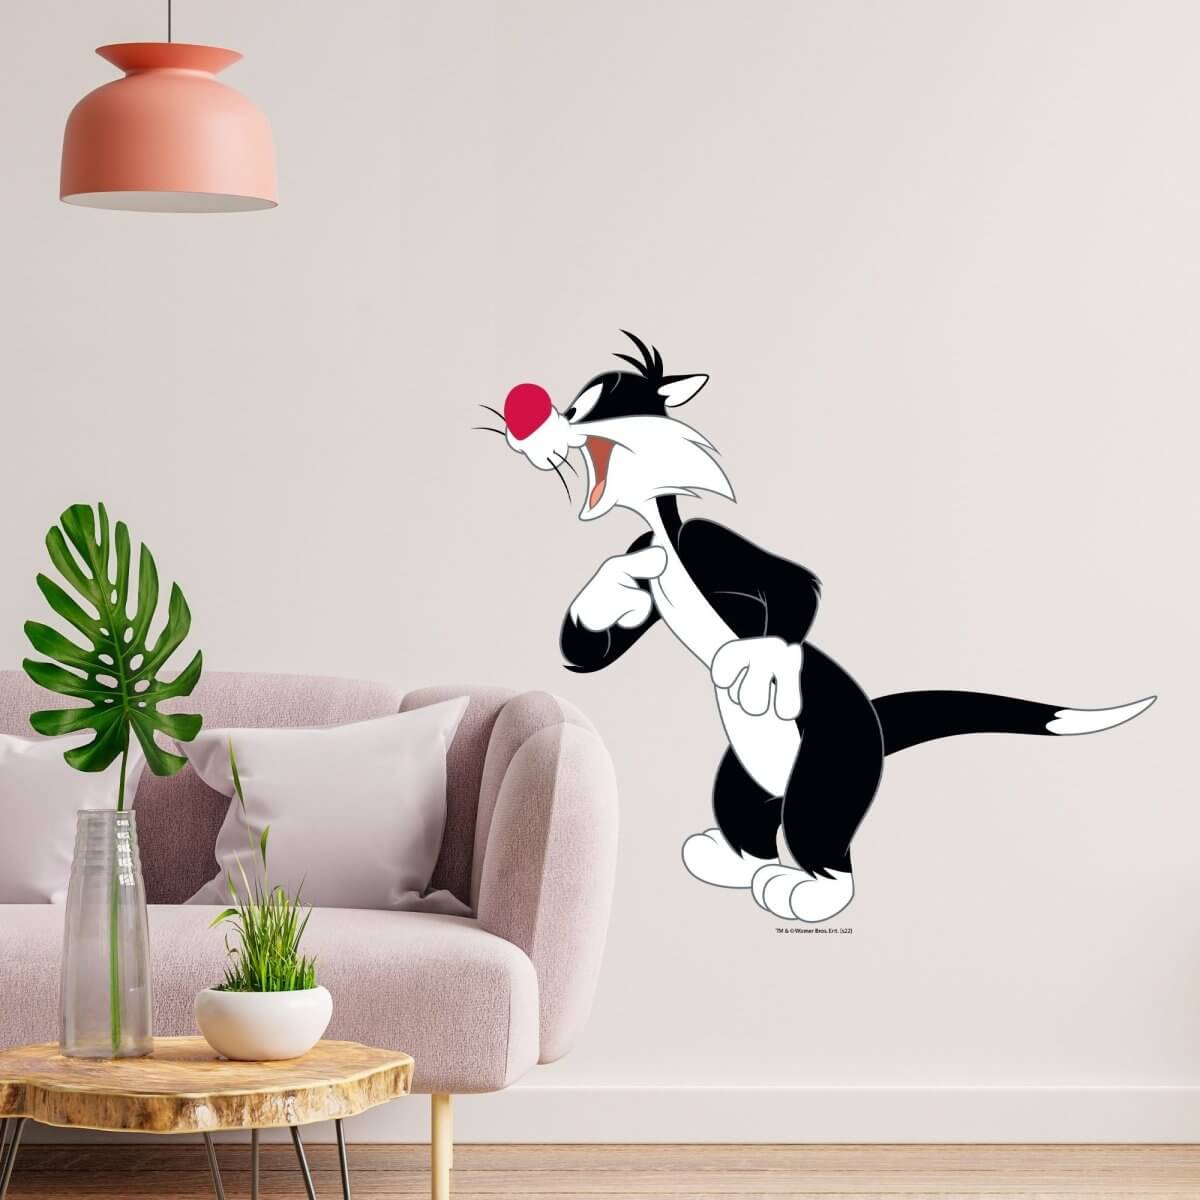 Kismet Decals Looney Tunes Sylvester Volunteer Licensed Wall Sticker - Easy DIY Home & Kids Room Decor Wall Decal Art - Kismet Decals